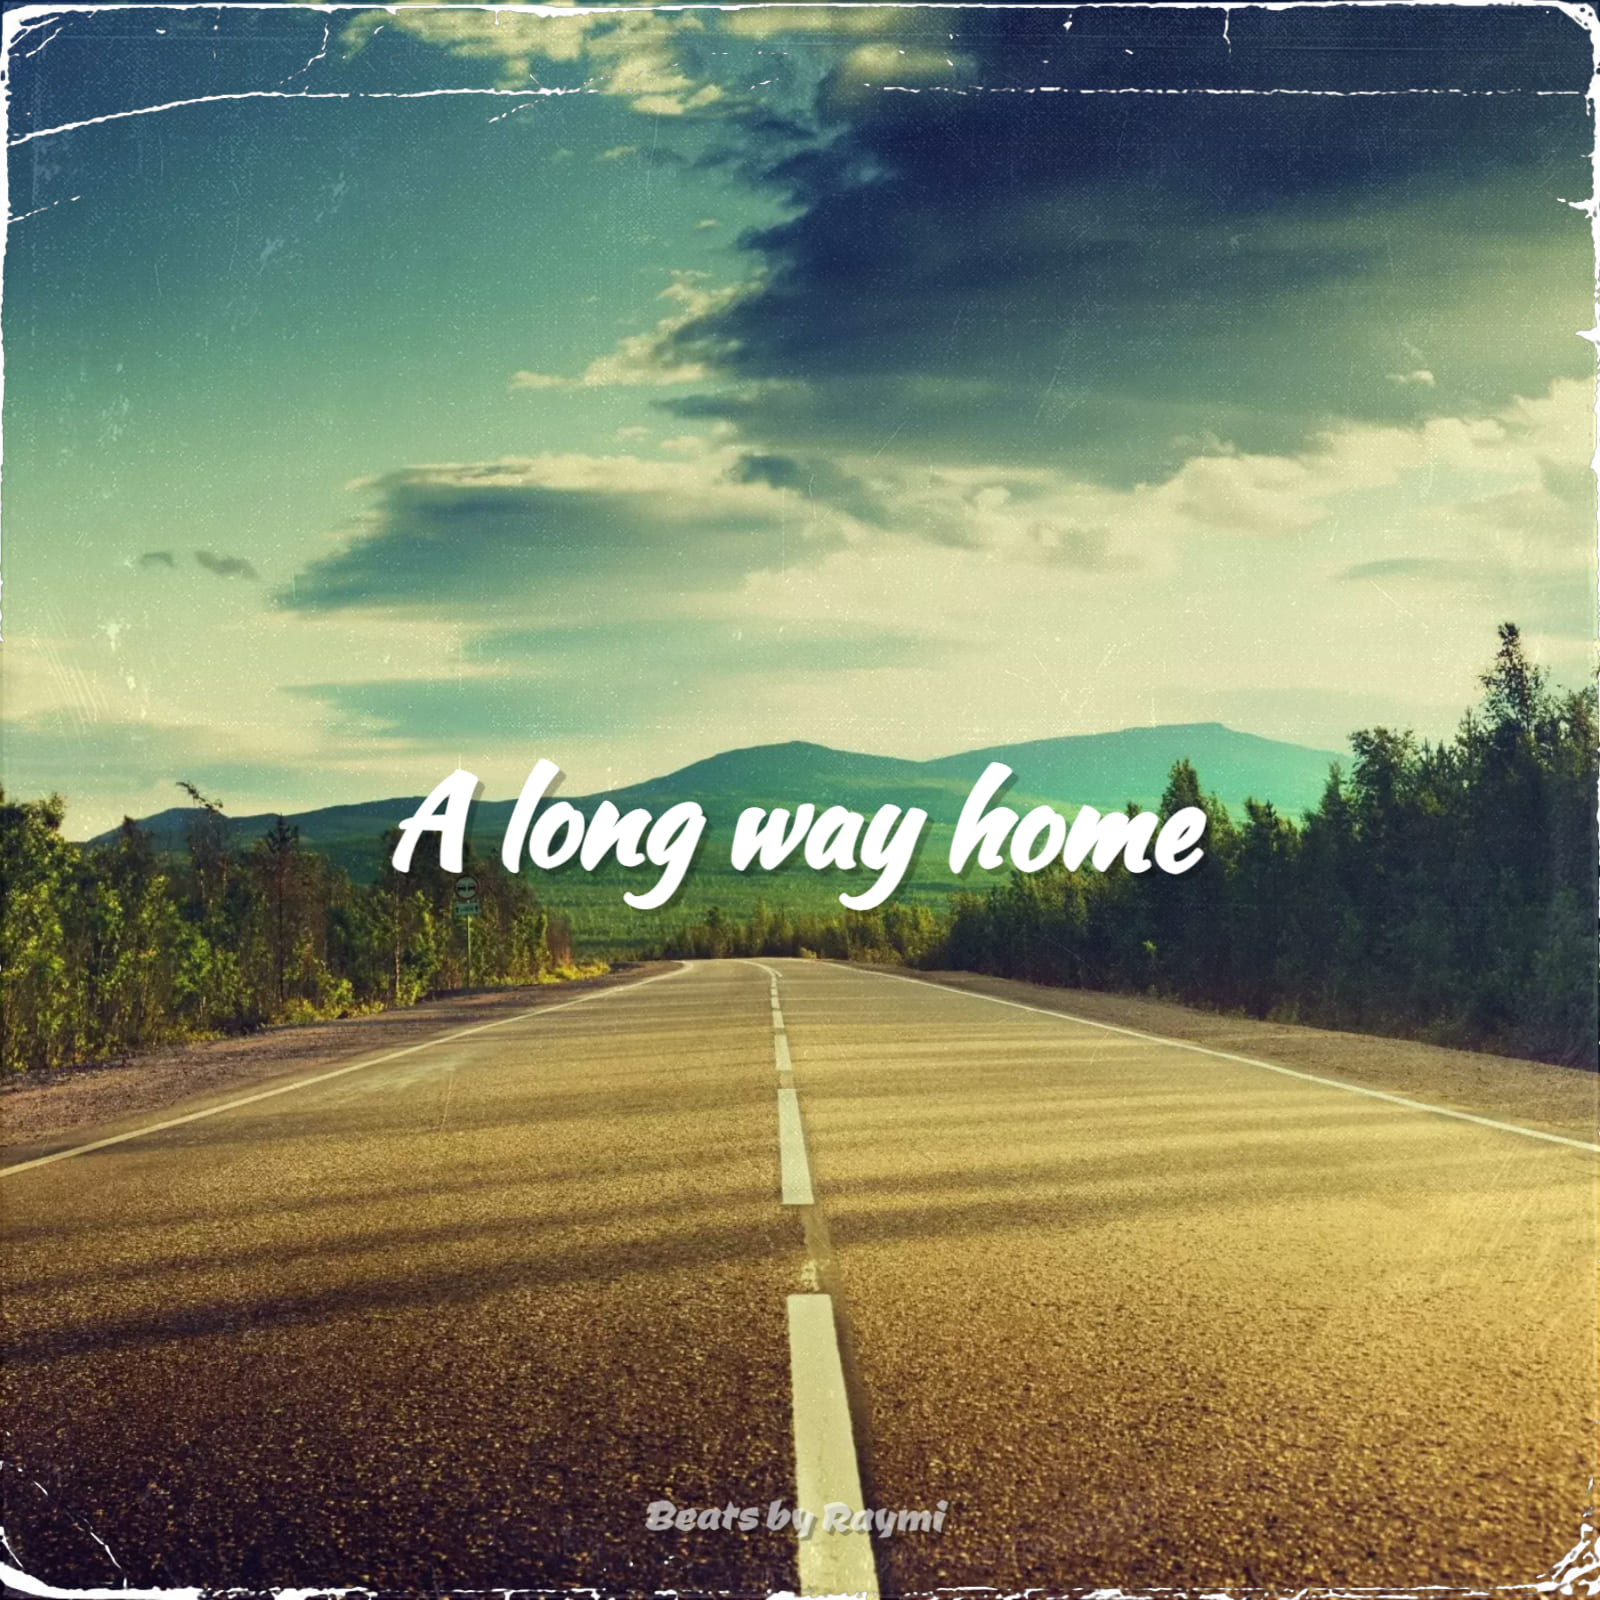 Будем вдвоем raymi remix. Long way. Long way Home. A long way Home анимэ.